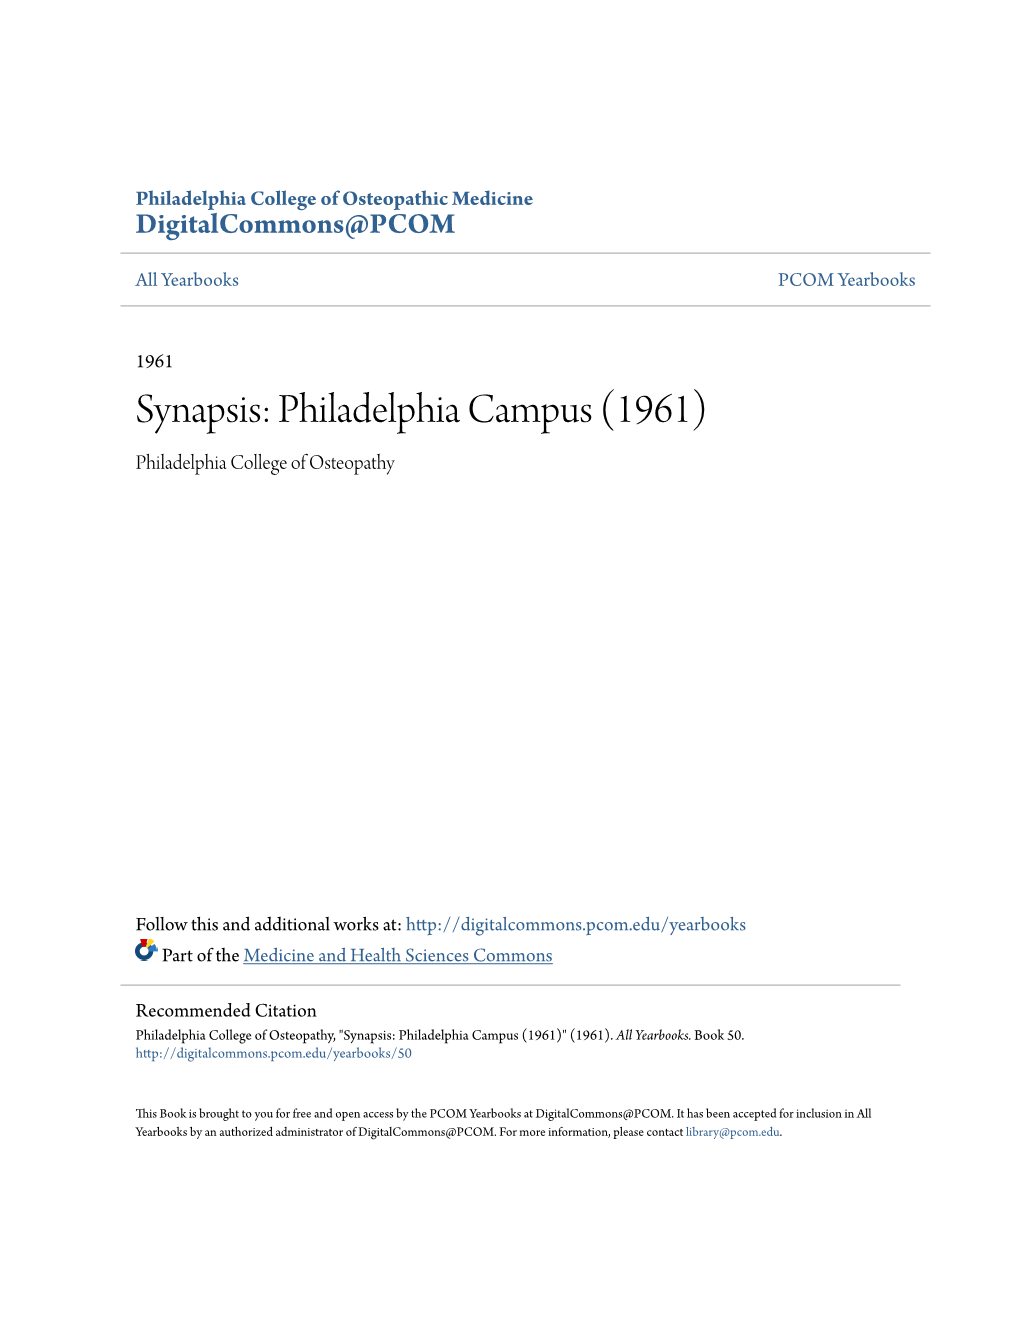 Synapsis: Philadelphia Campus (1961) Philadelphia College of Osteopathy